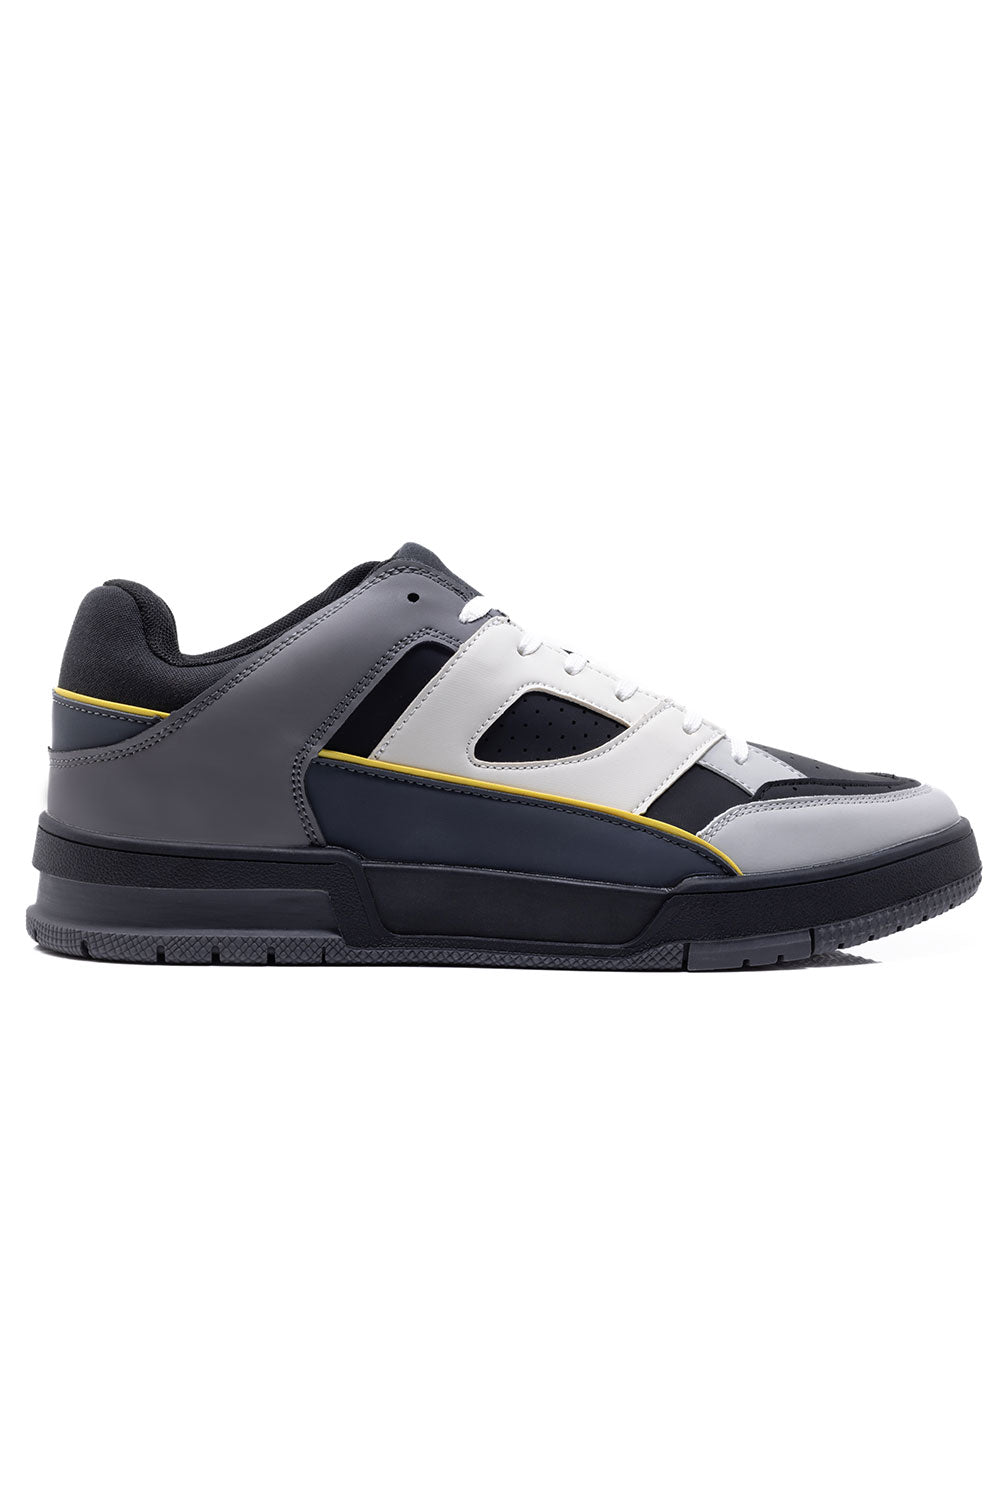 Barabas Men's Premium Running Multicolor Leather Sneakers 4SK01 Grey